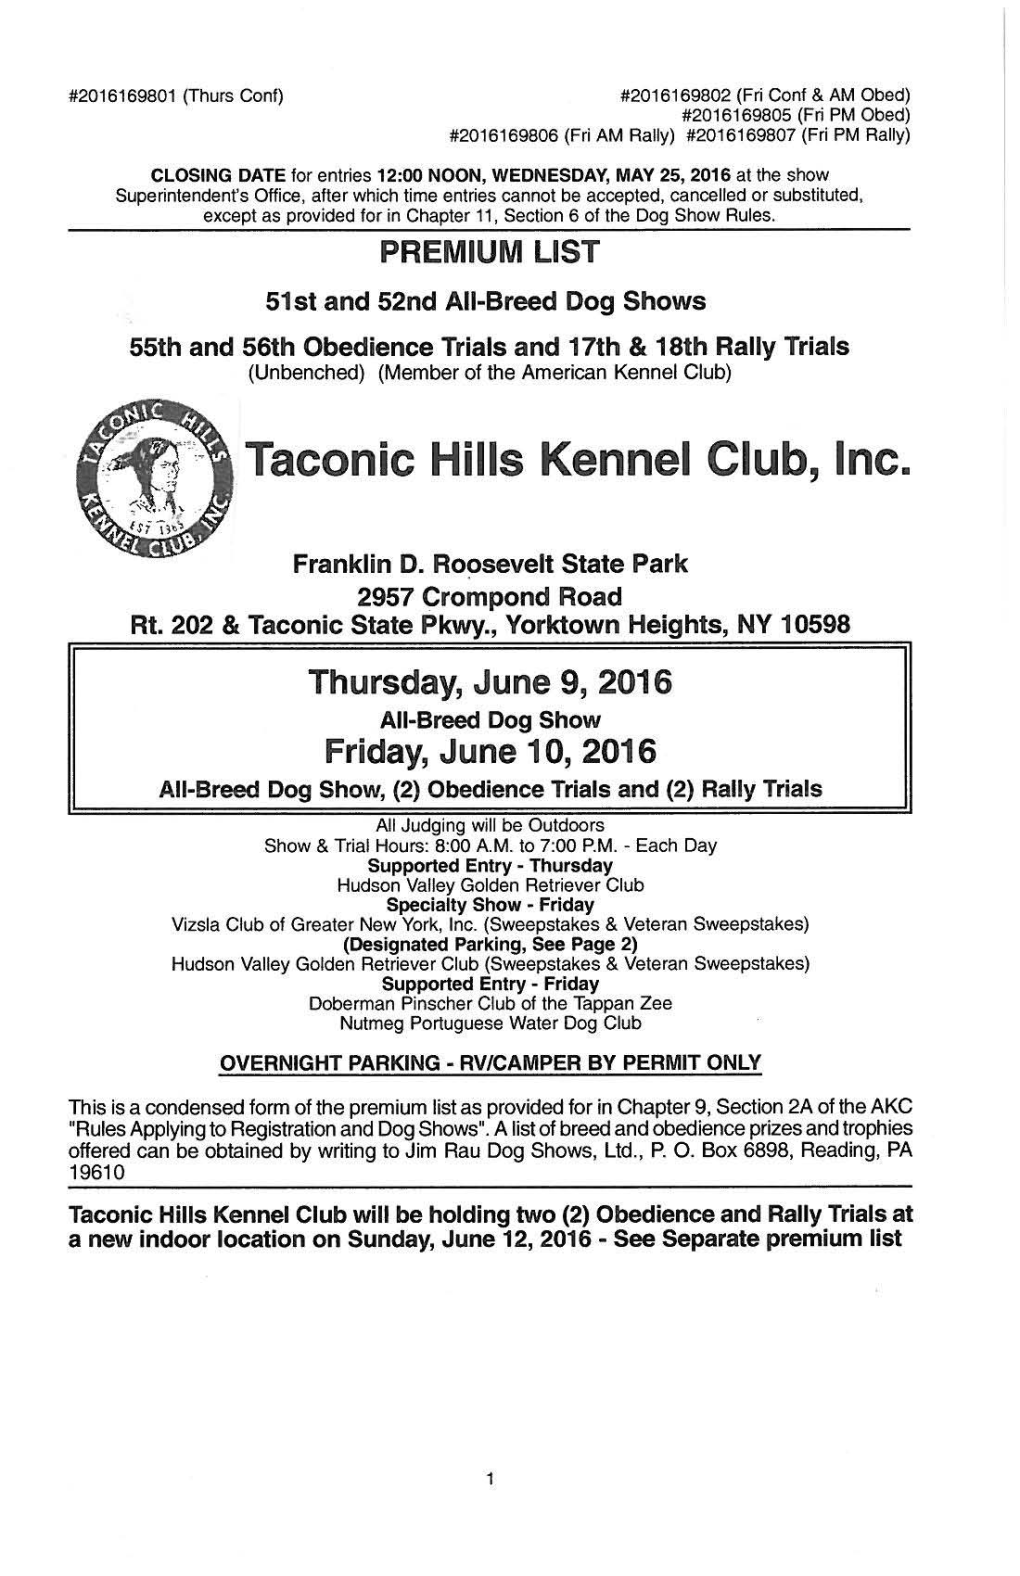 Taconic Hills Kennel Club, Inc